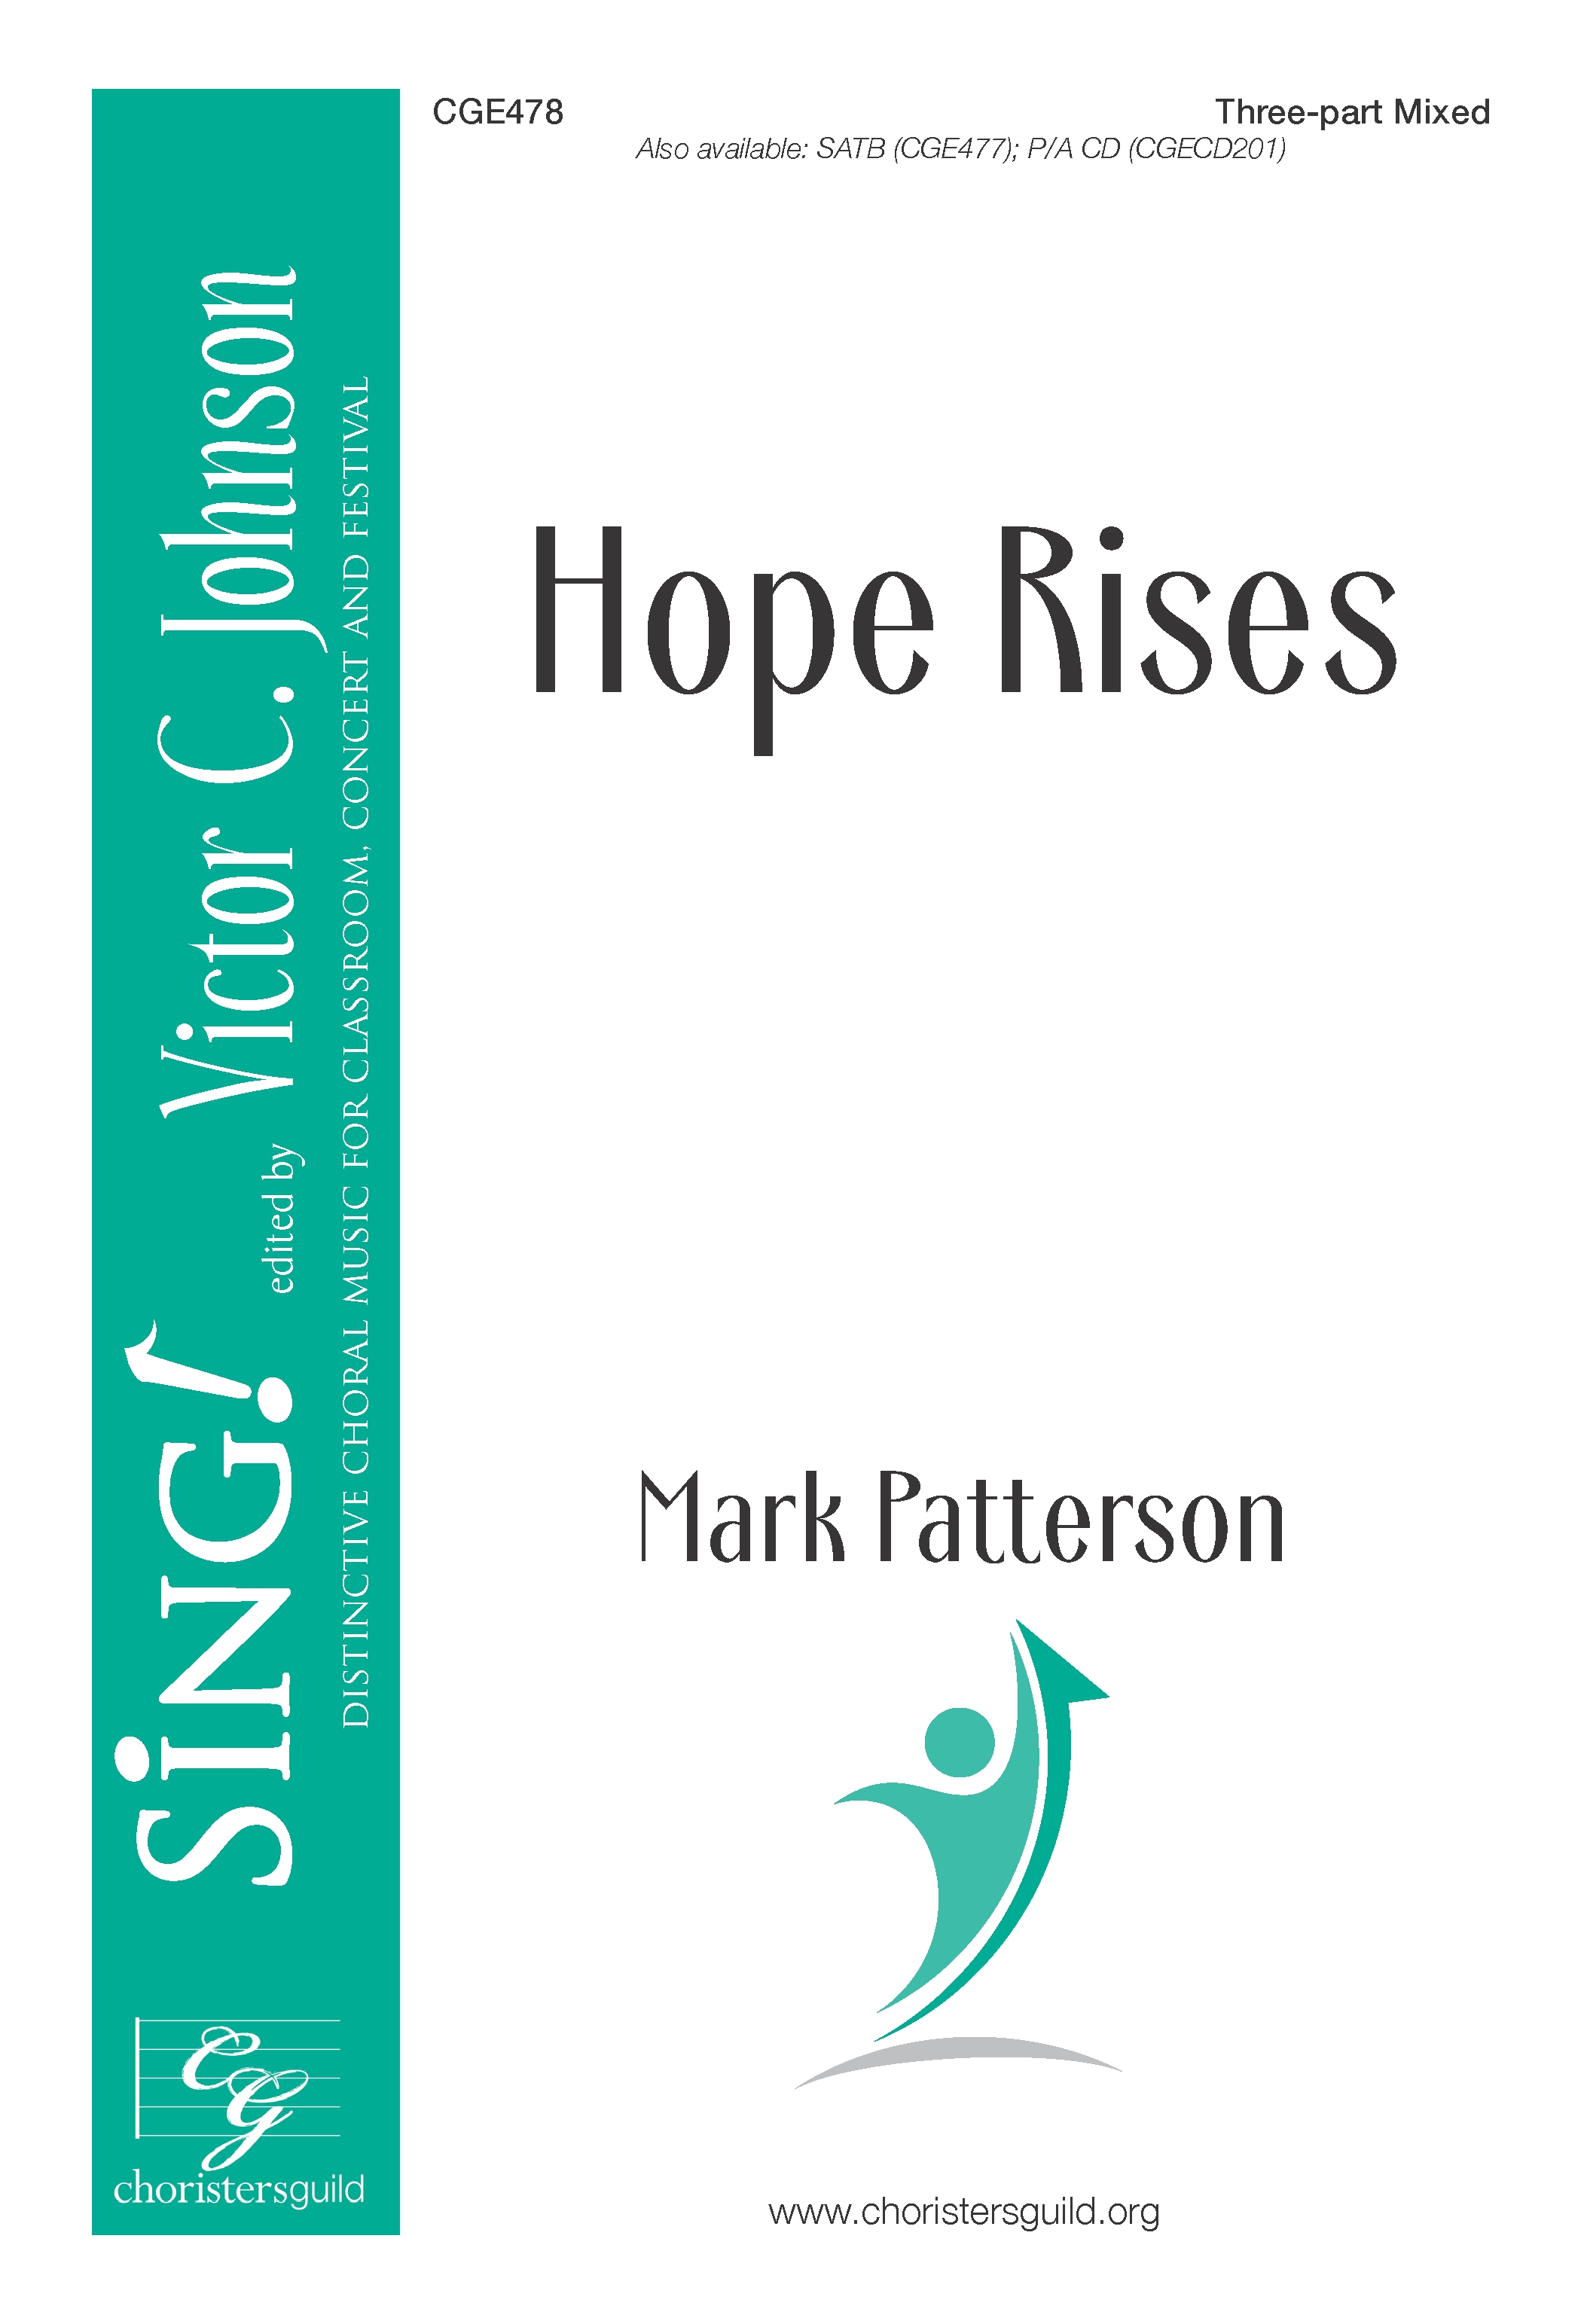 Hope Rises - Three-part Mixed